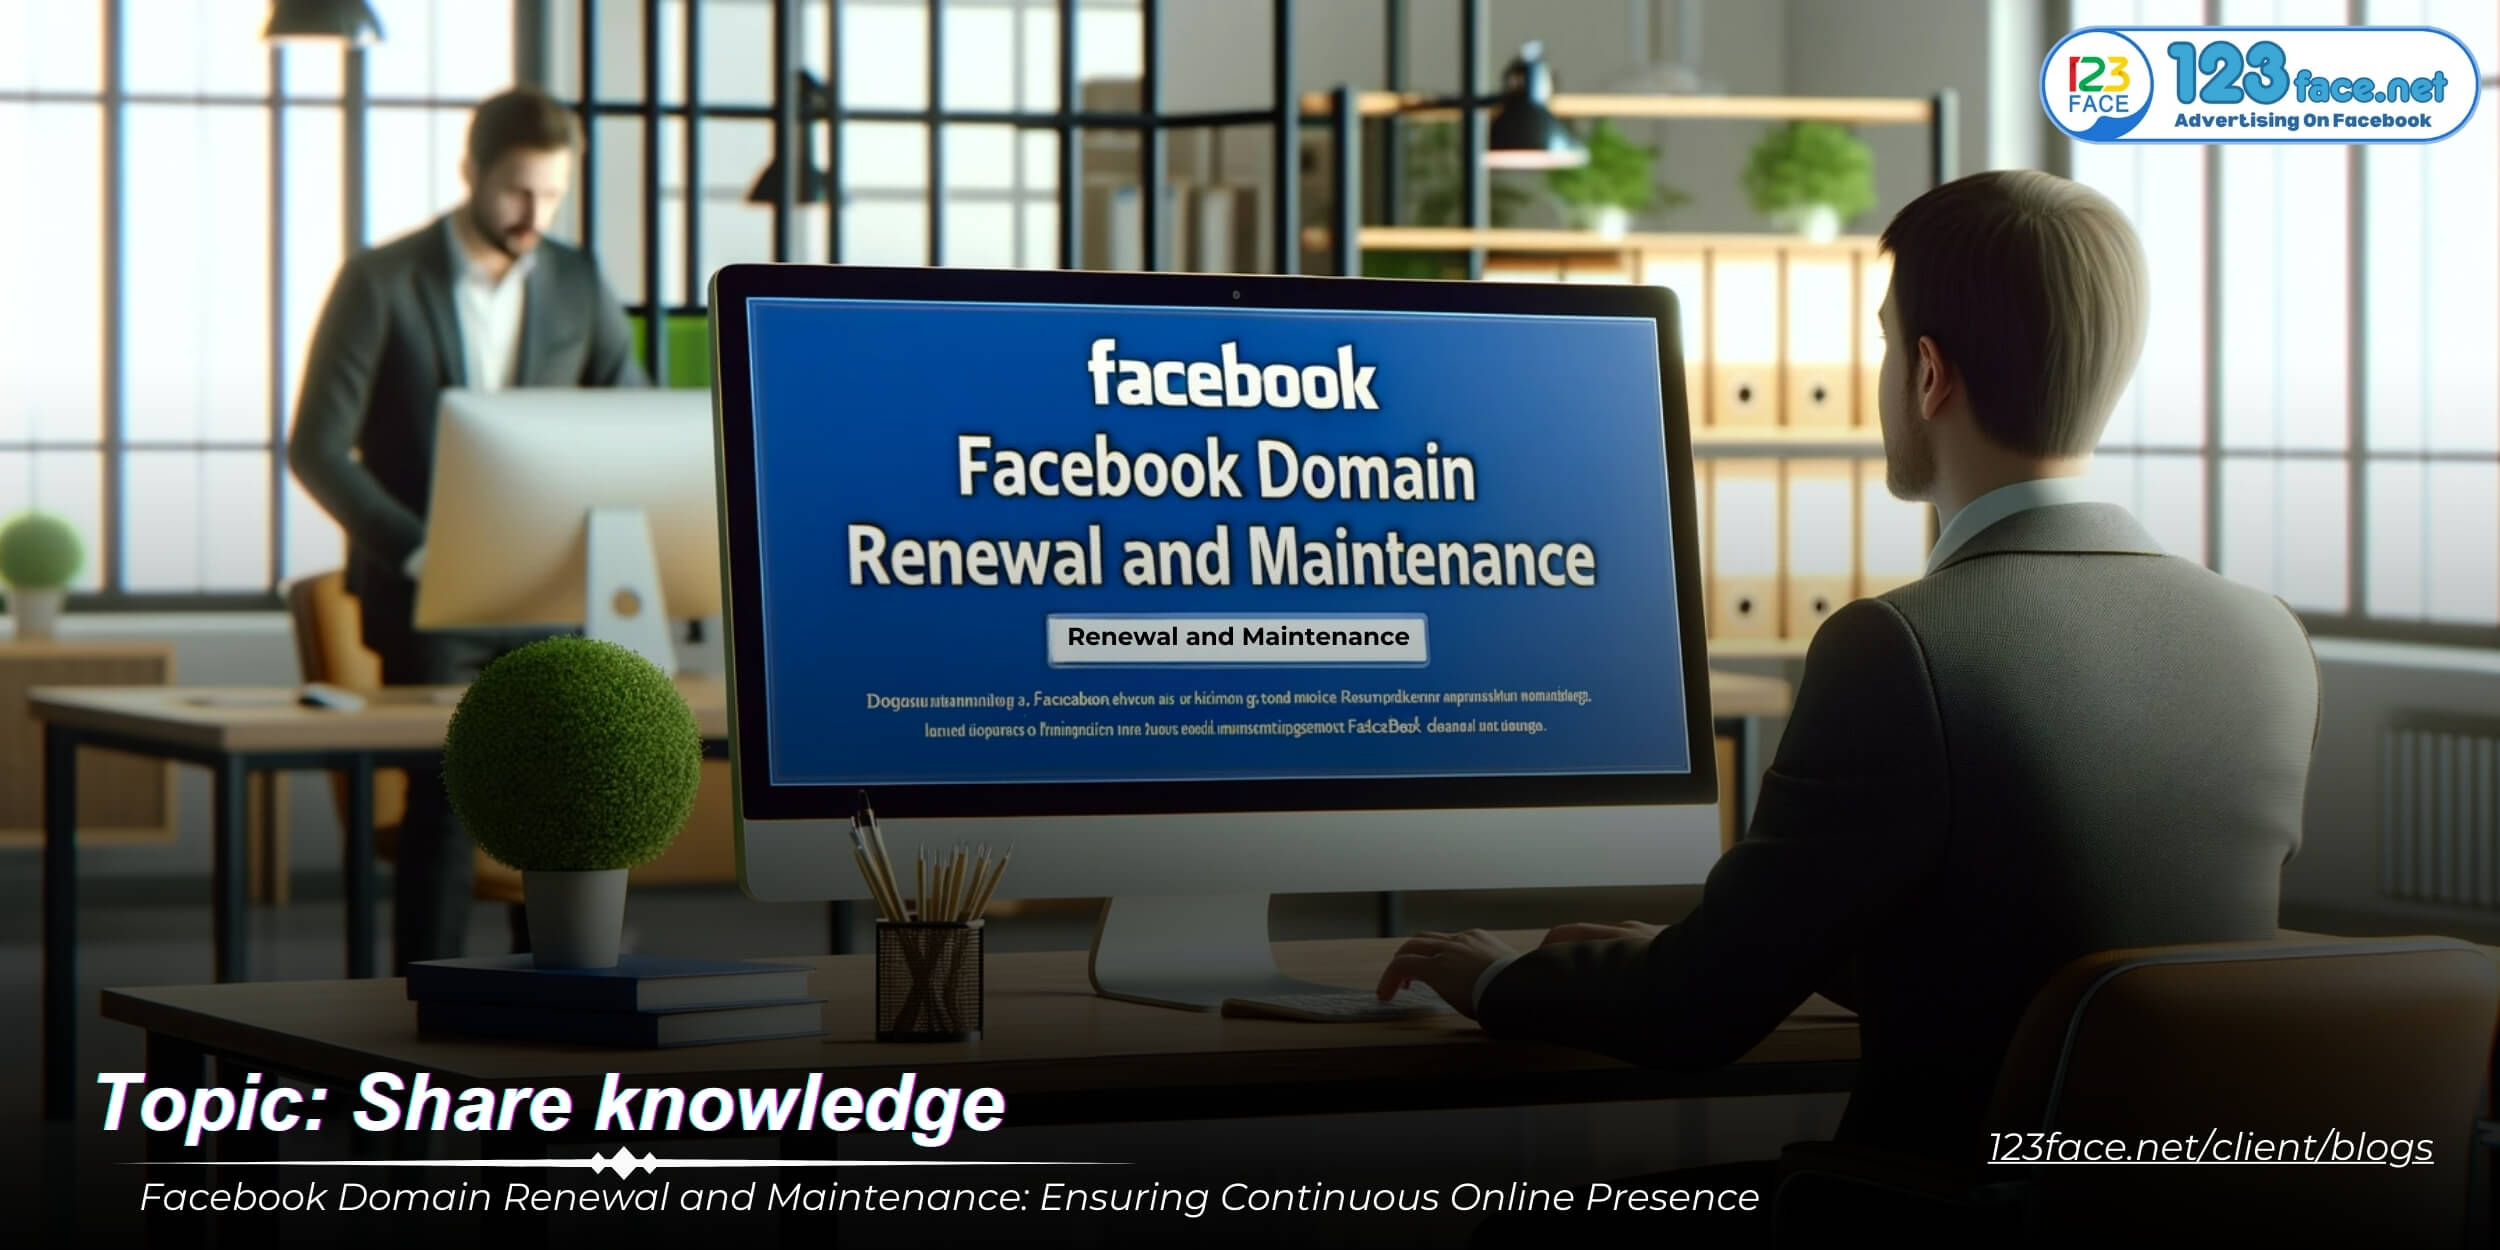 Facebook Domain Renewal and Maintenance: Ensuring Continuous Online Presence